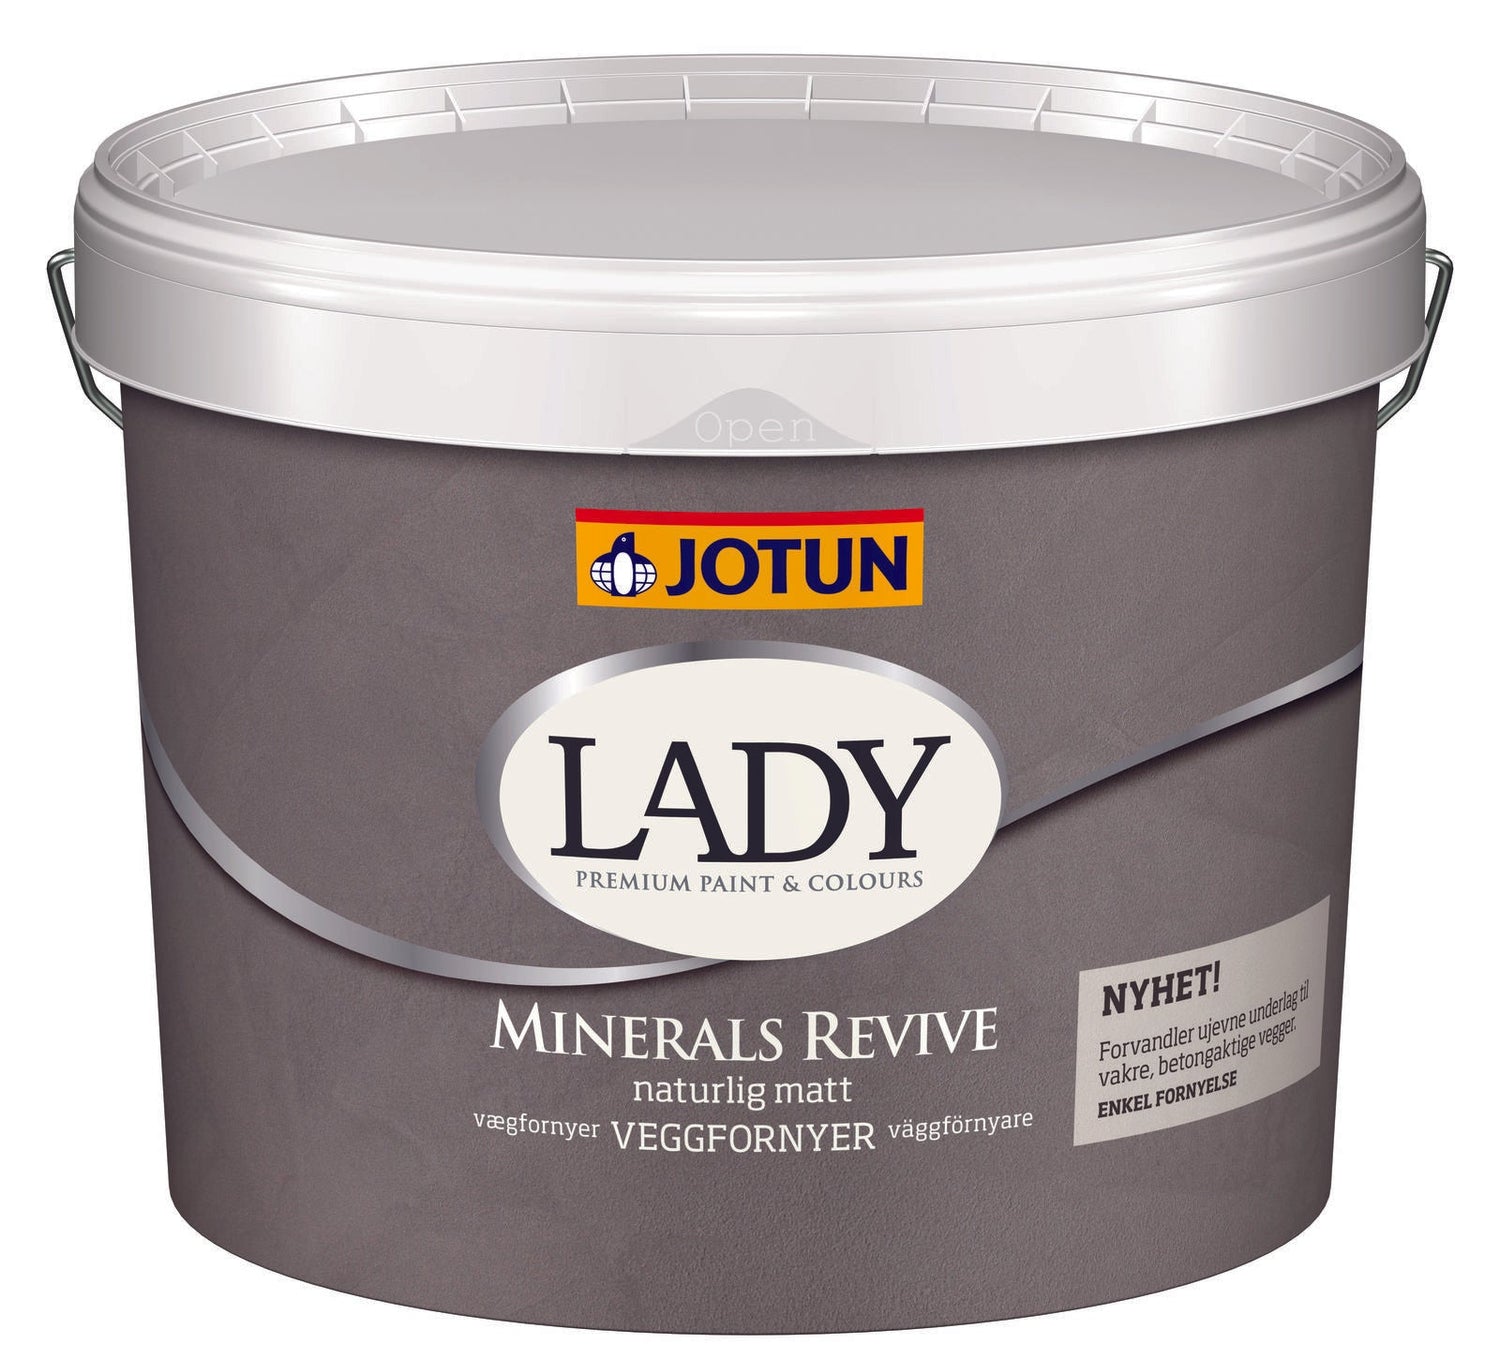 1303 OBSERVE - Jotun Lady Minerals Revive - Malprivat.dk